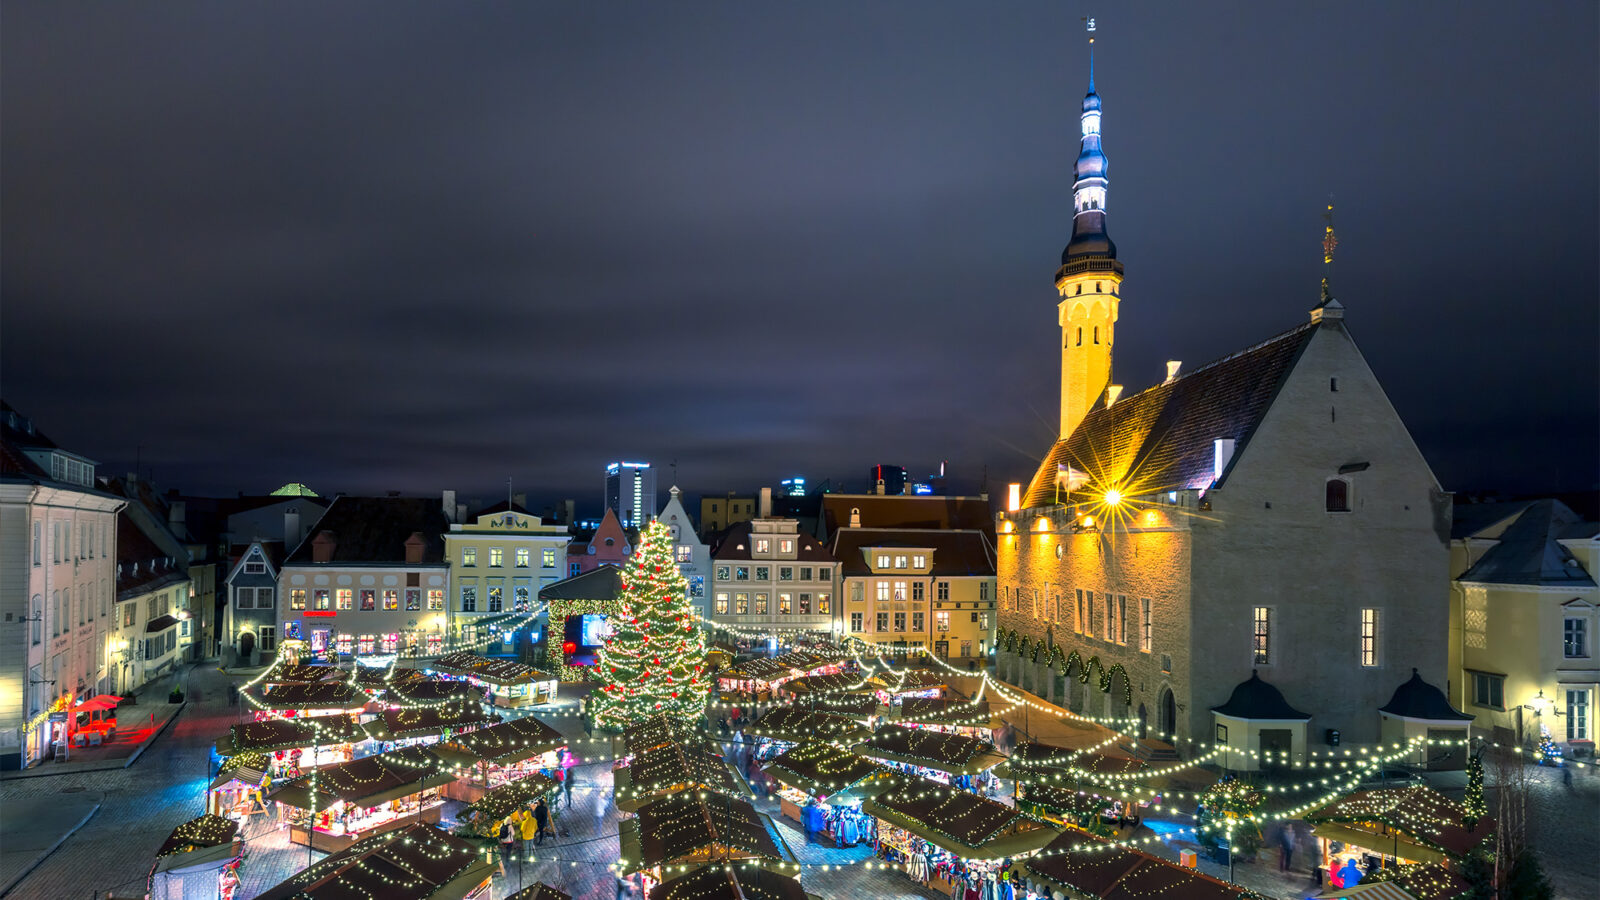 The Christmas Market at Town Hall Square in Tallinn, Estonia